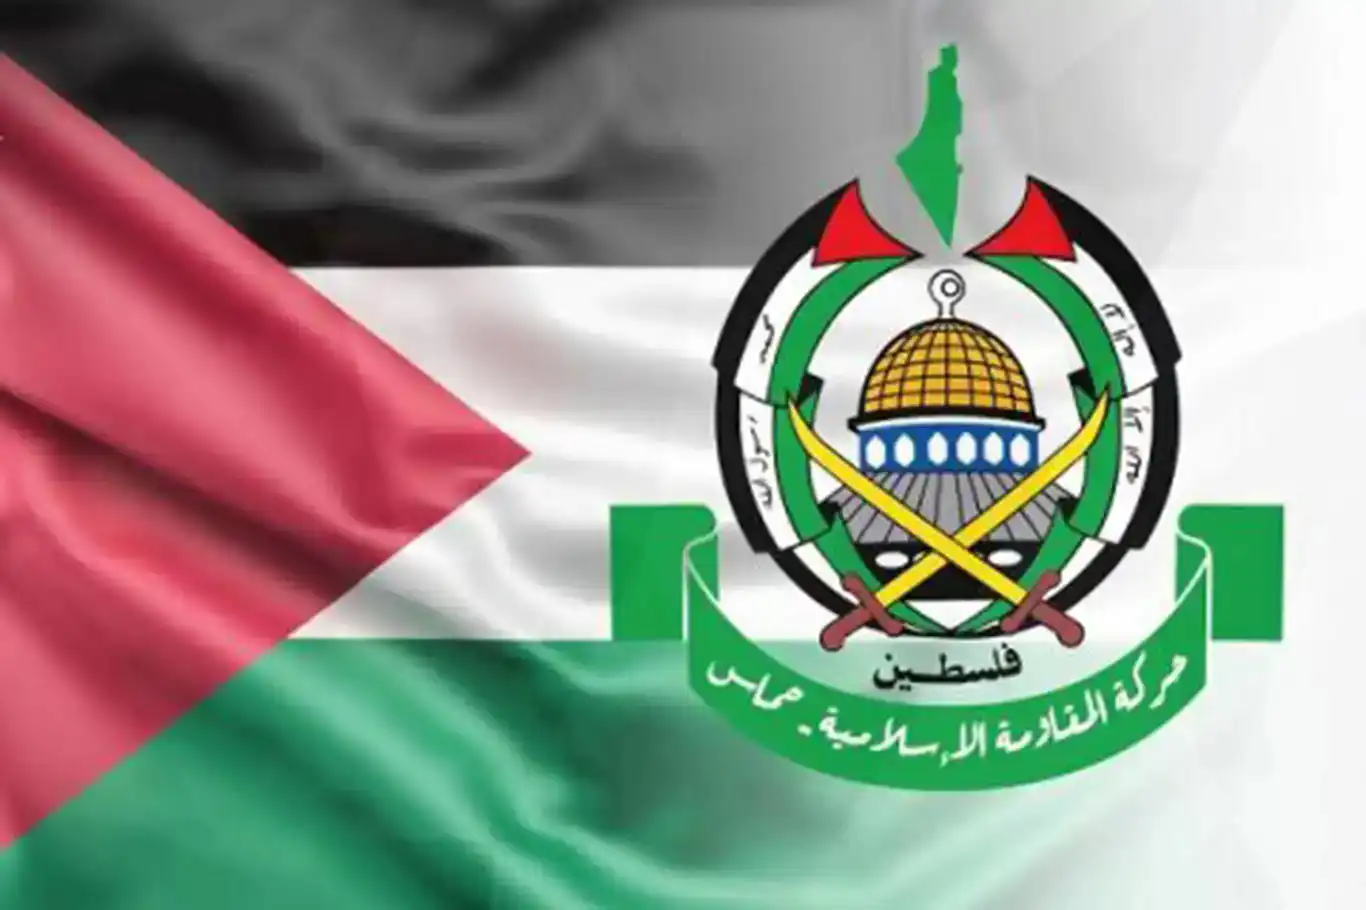 Hamas welcomes ICJ opinion on Israeli occupation